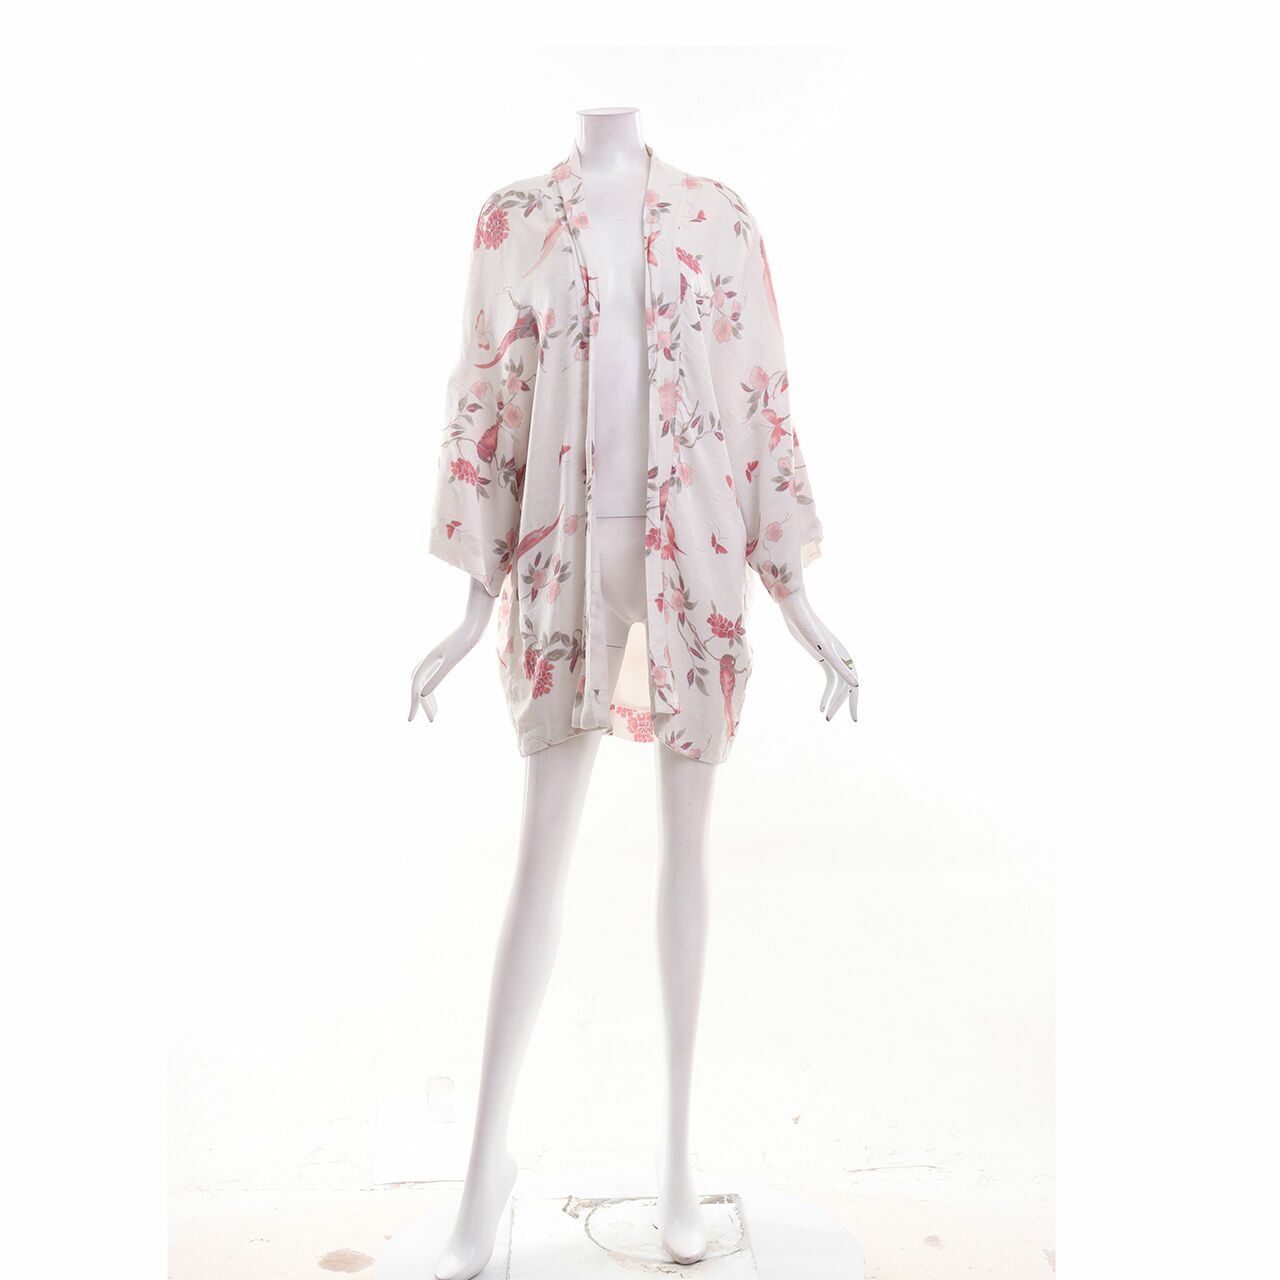 H&M Broken White Floral Kimono Outerwear